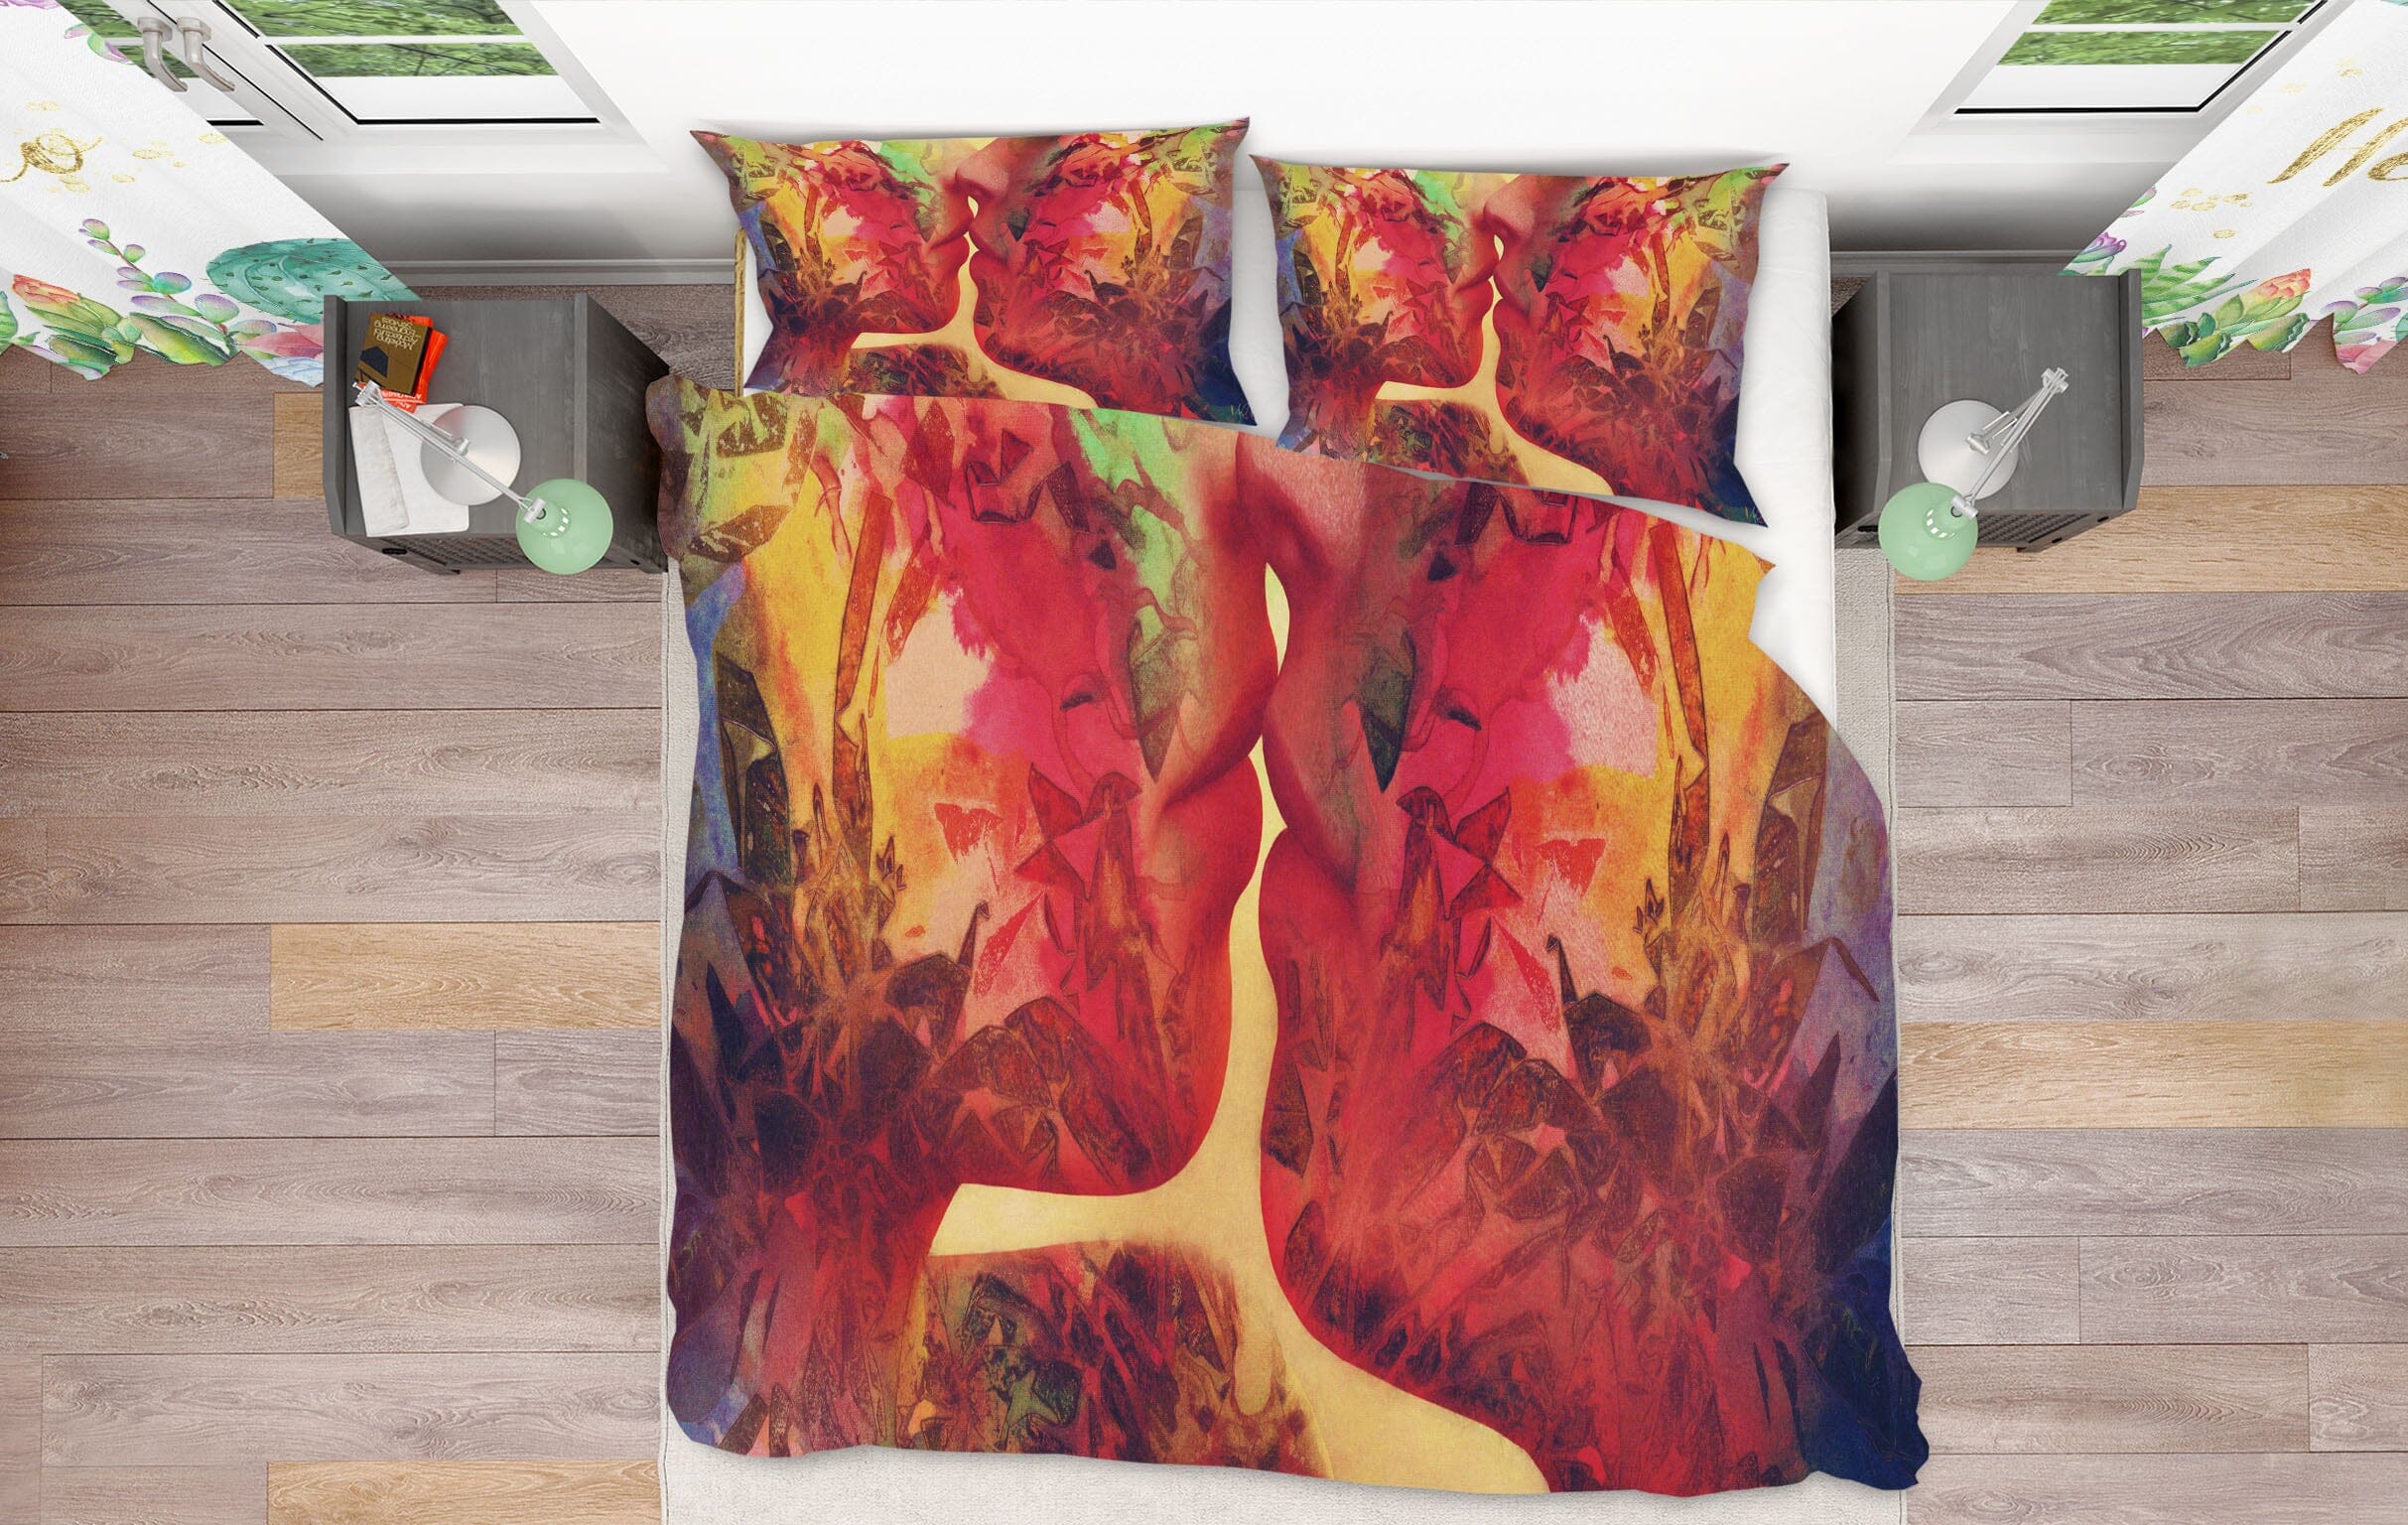 3D Graffiti Love 2005 Marco Cavazzana Bedding Bed Pillowcases Quilt Quiet Covers AJ Creativity Home 